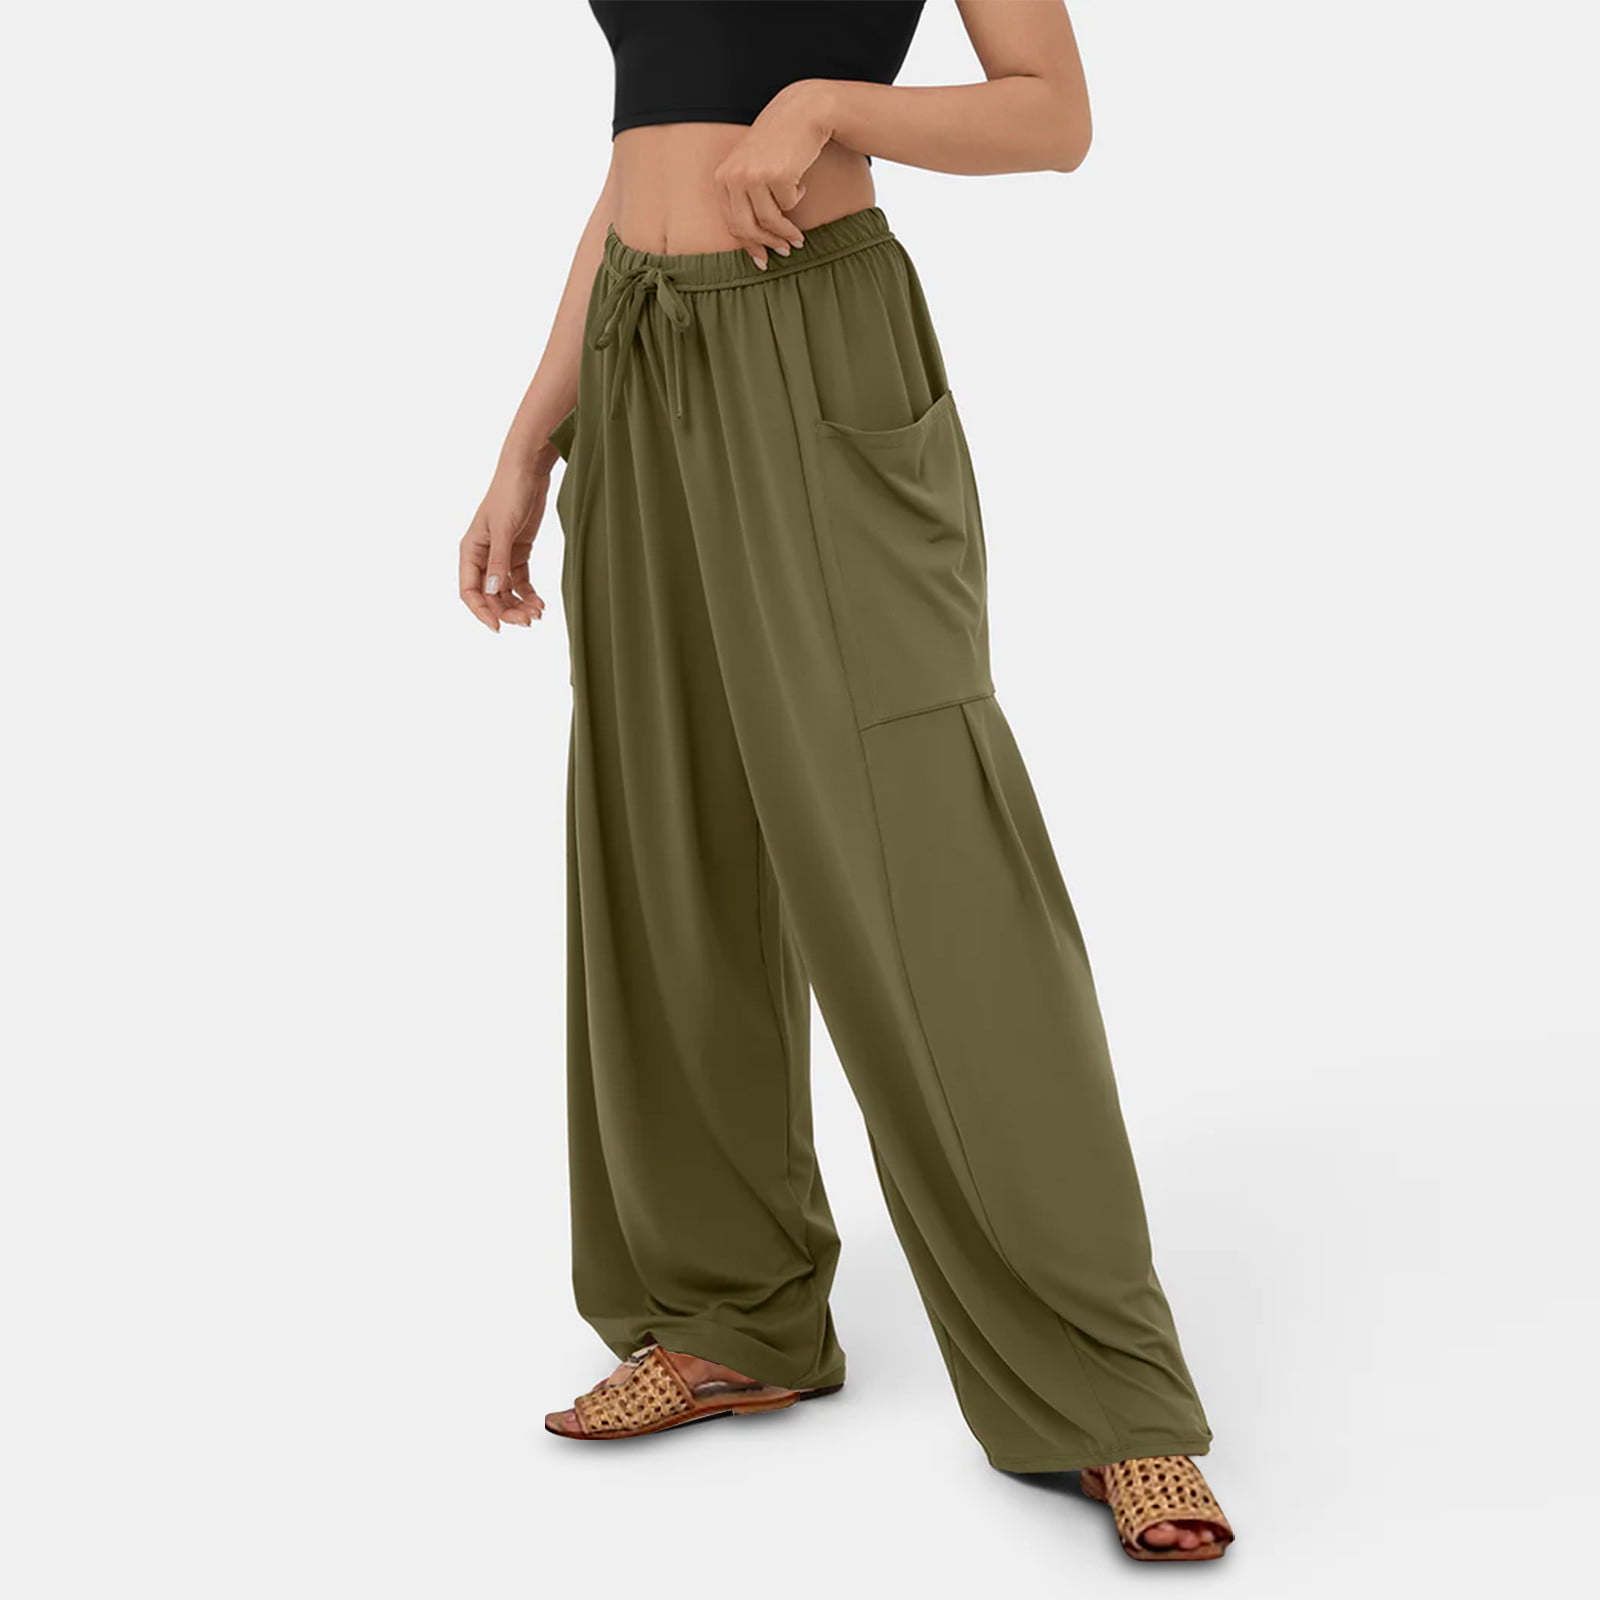 KIHOUT Women's Casual Elastic Waist Drawstring Solid Long Pants With Pocket  